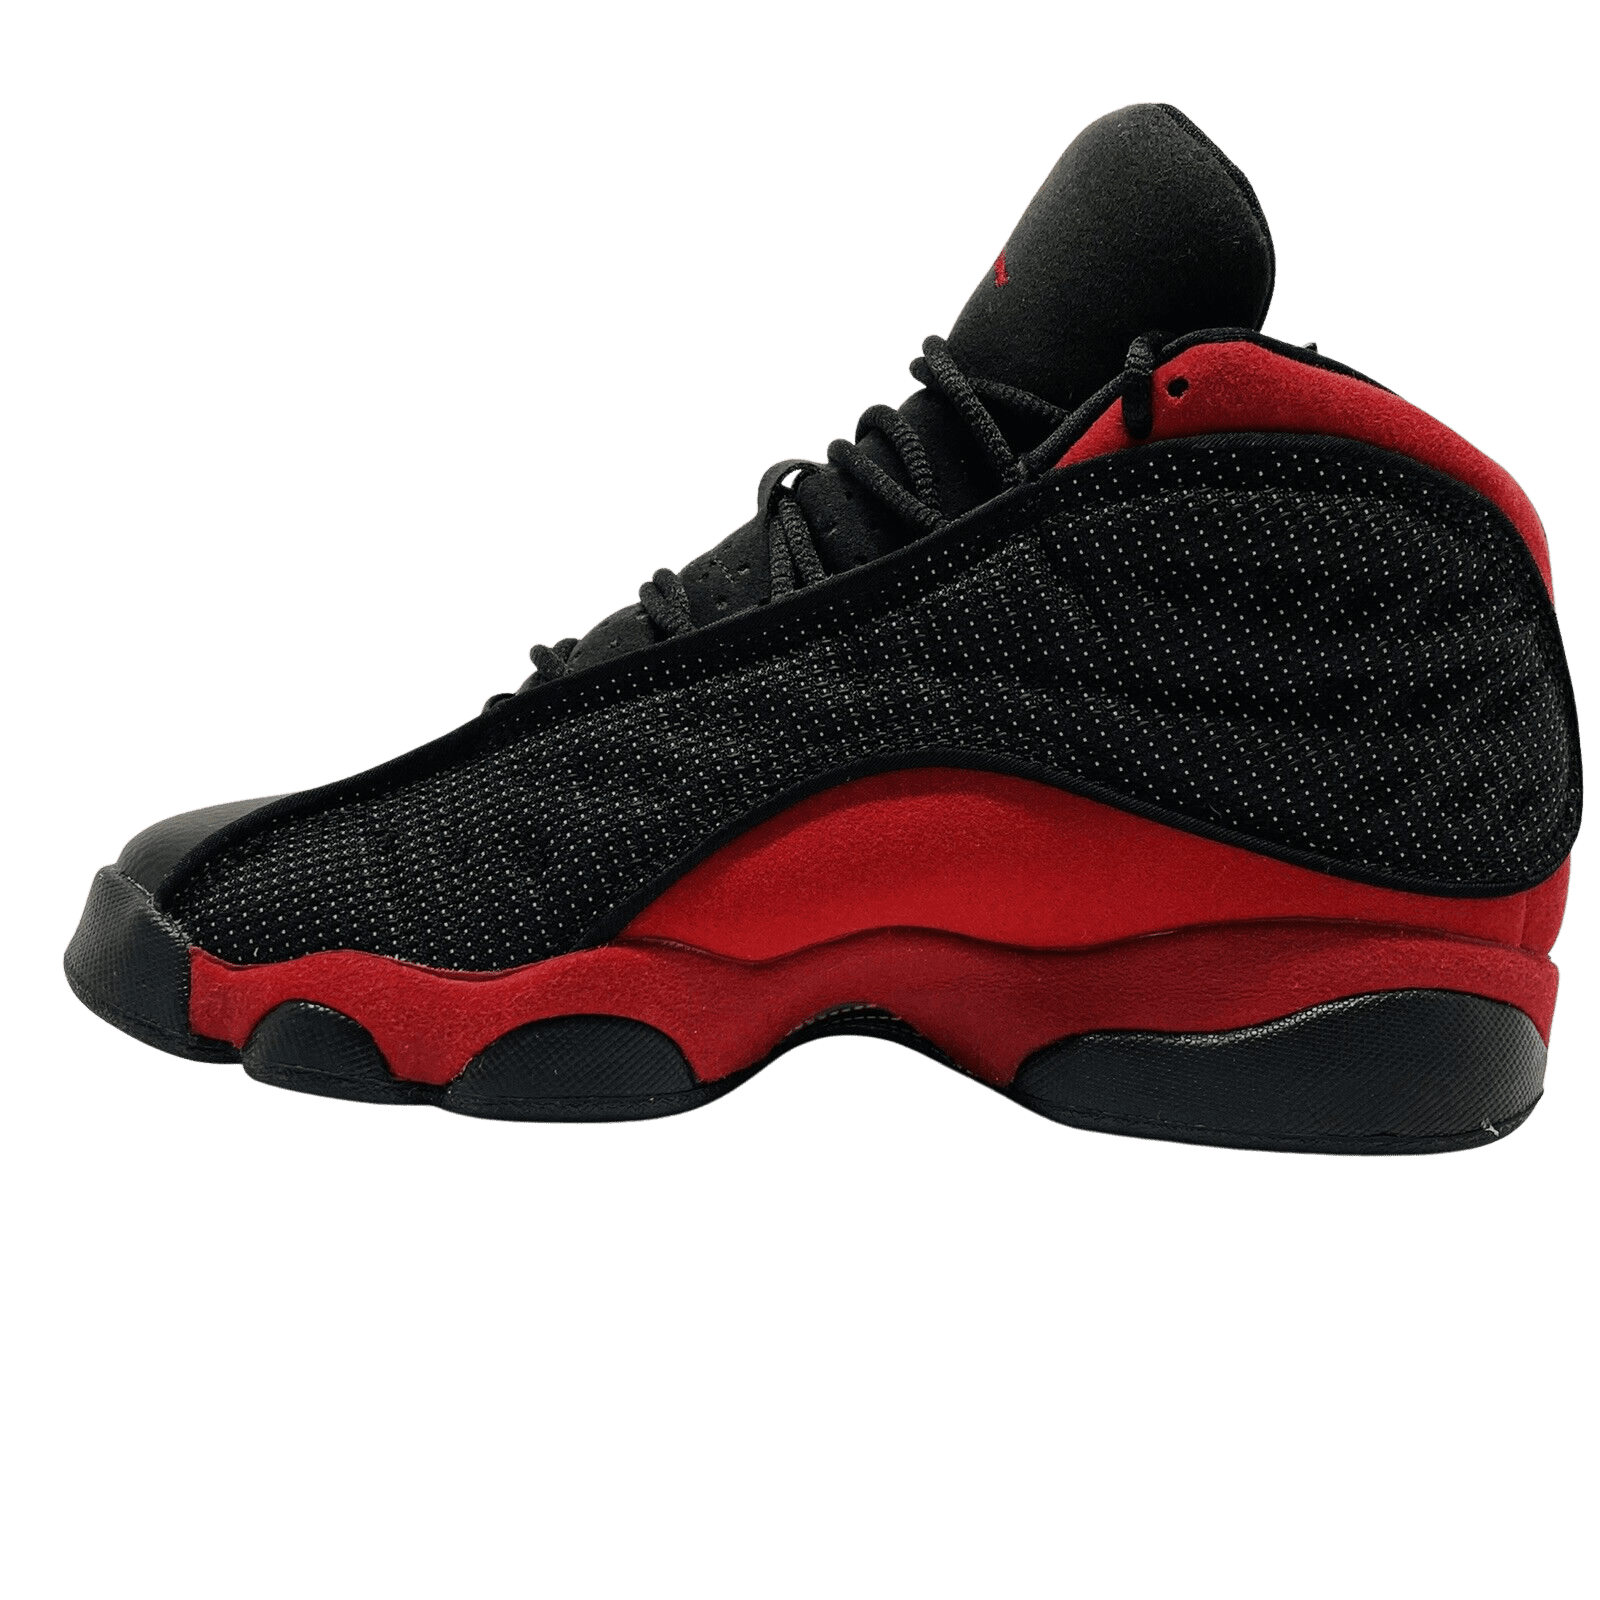 Jordan 13 Bred Sneakers Offer Retro Style | eBay